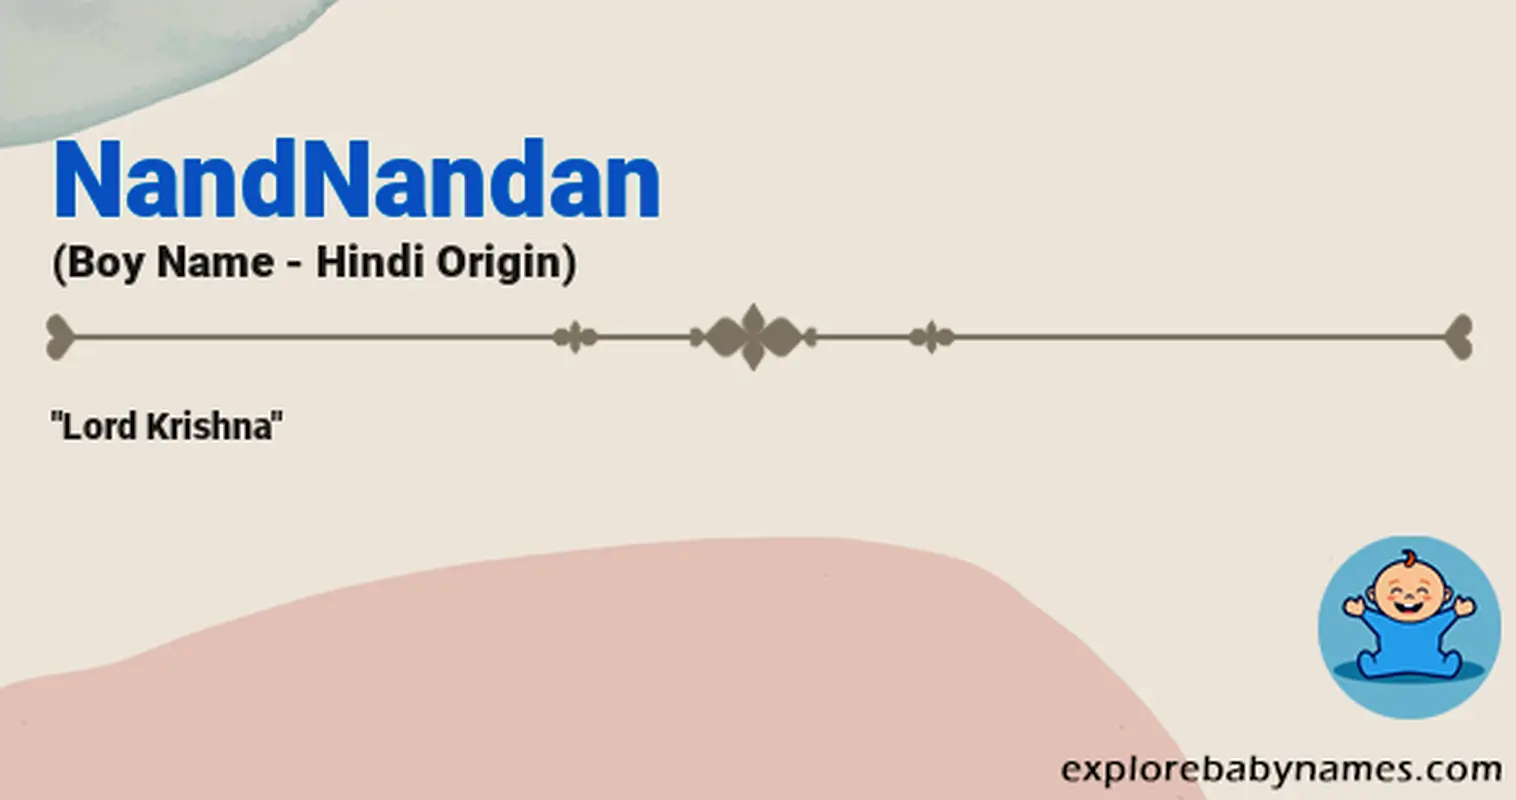 Meaning of NandNandan